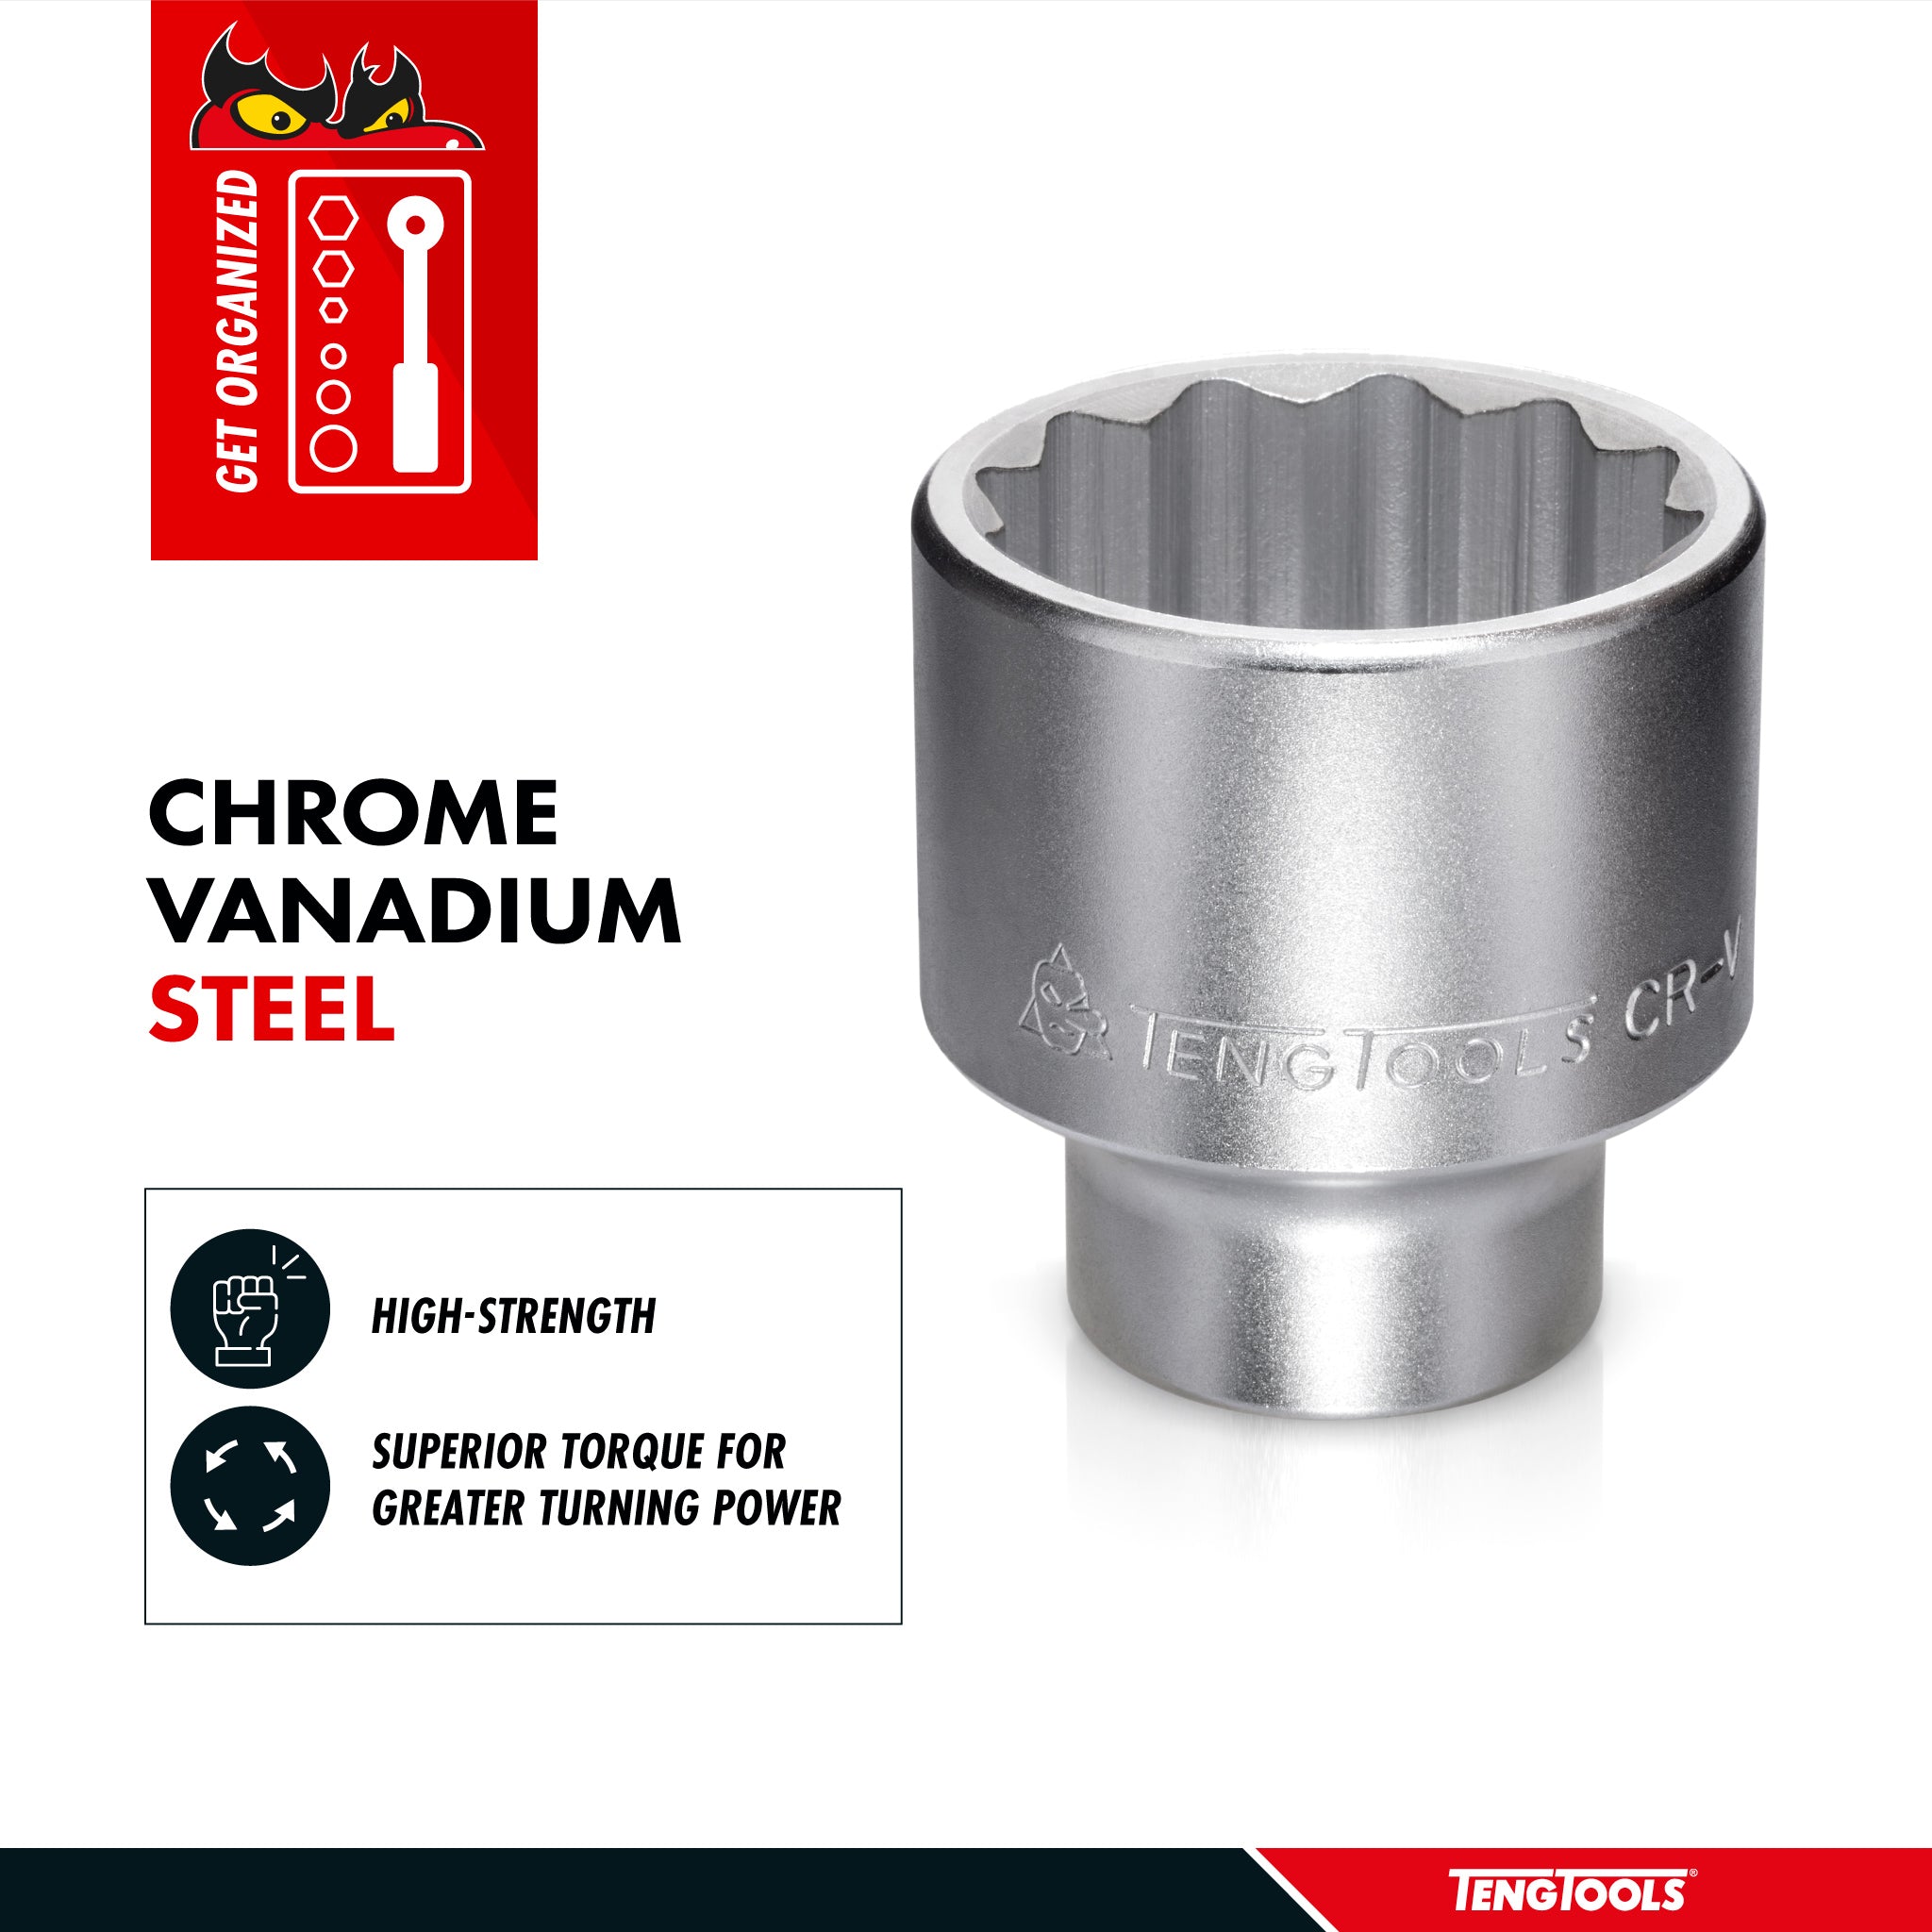 Teng Tools 1 Inch Drive 12 Point Metric Shallow Chrome Vanadium Sockets - 75mm